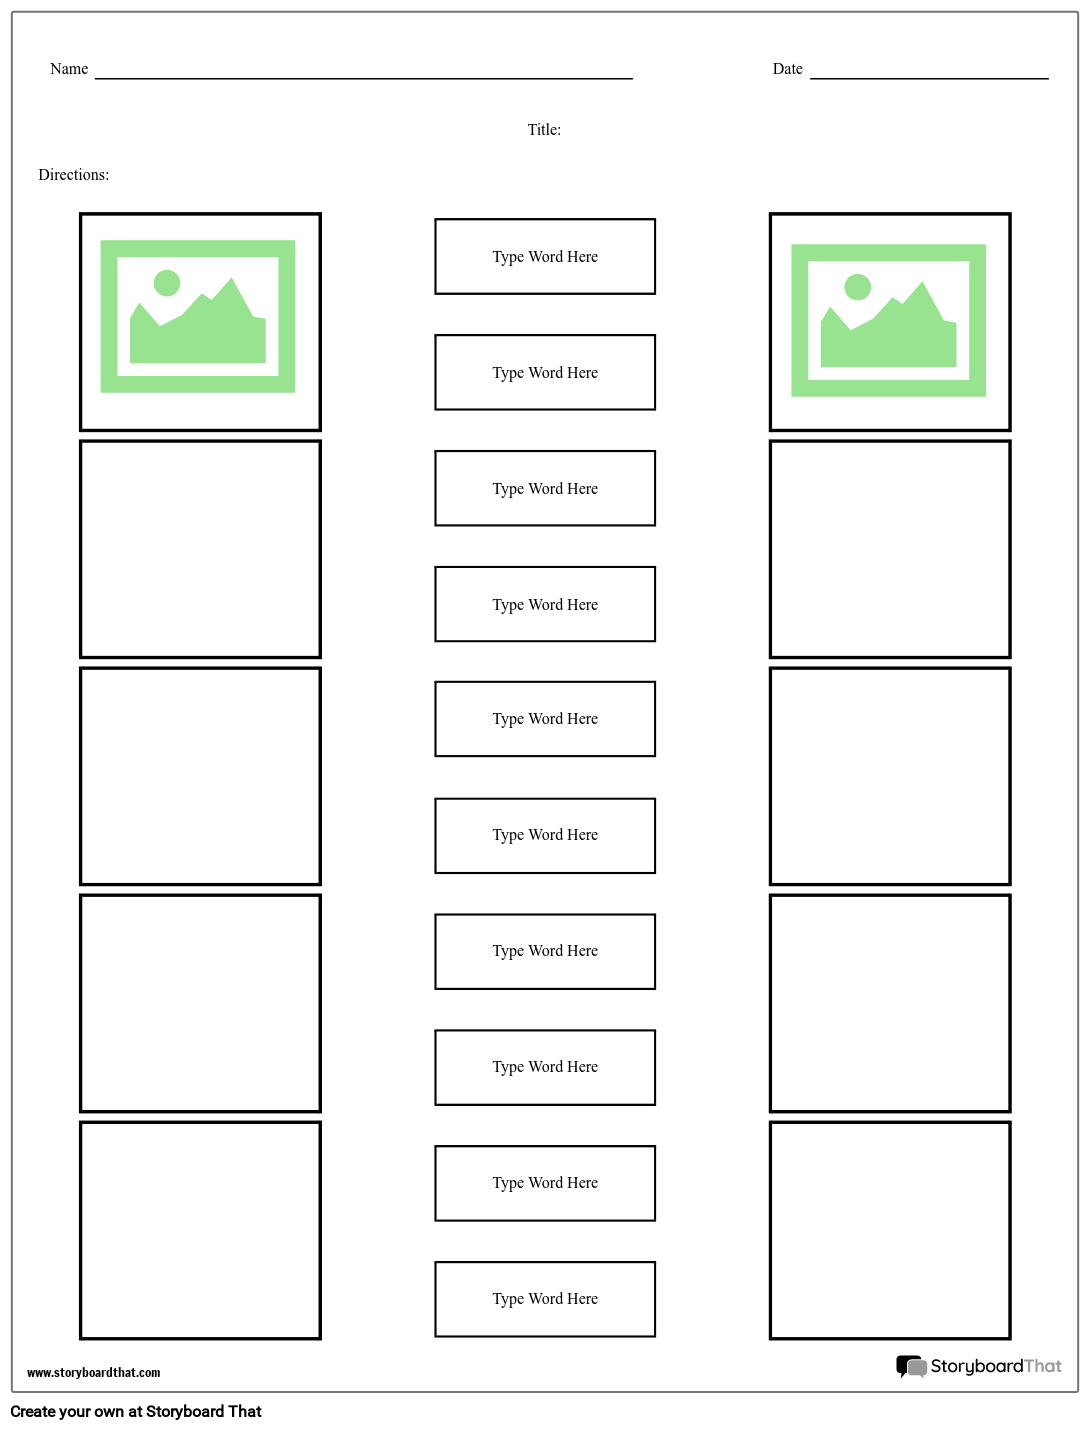 matching-worksheet-template-create-matching-quiz-storyboardthat